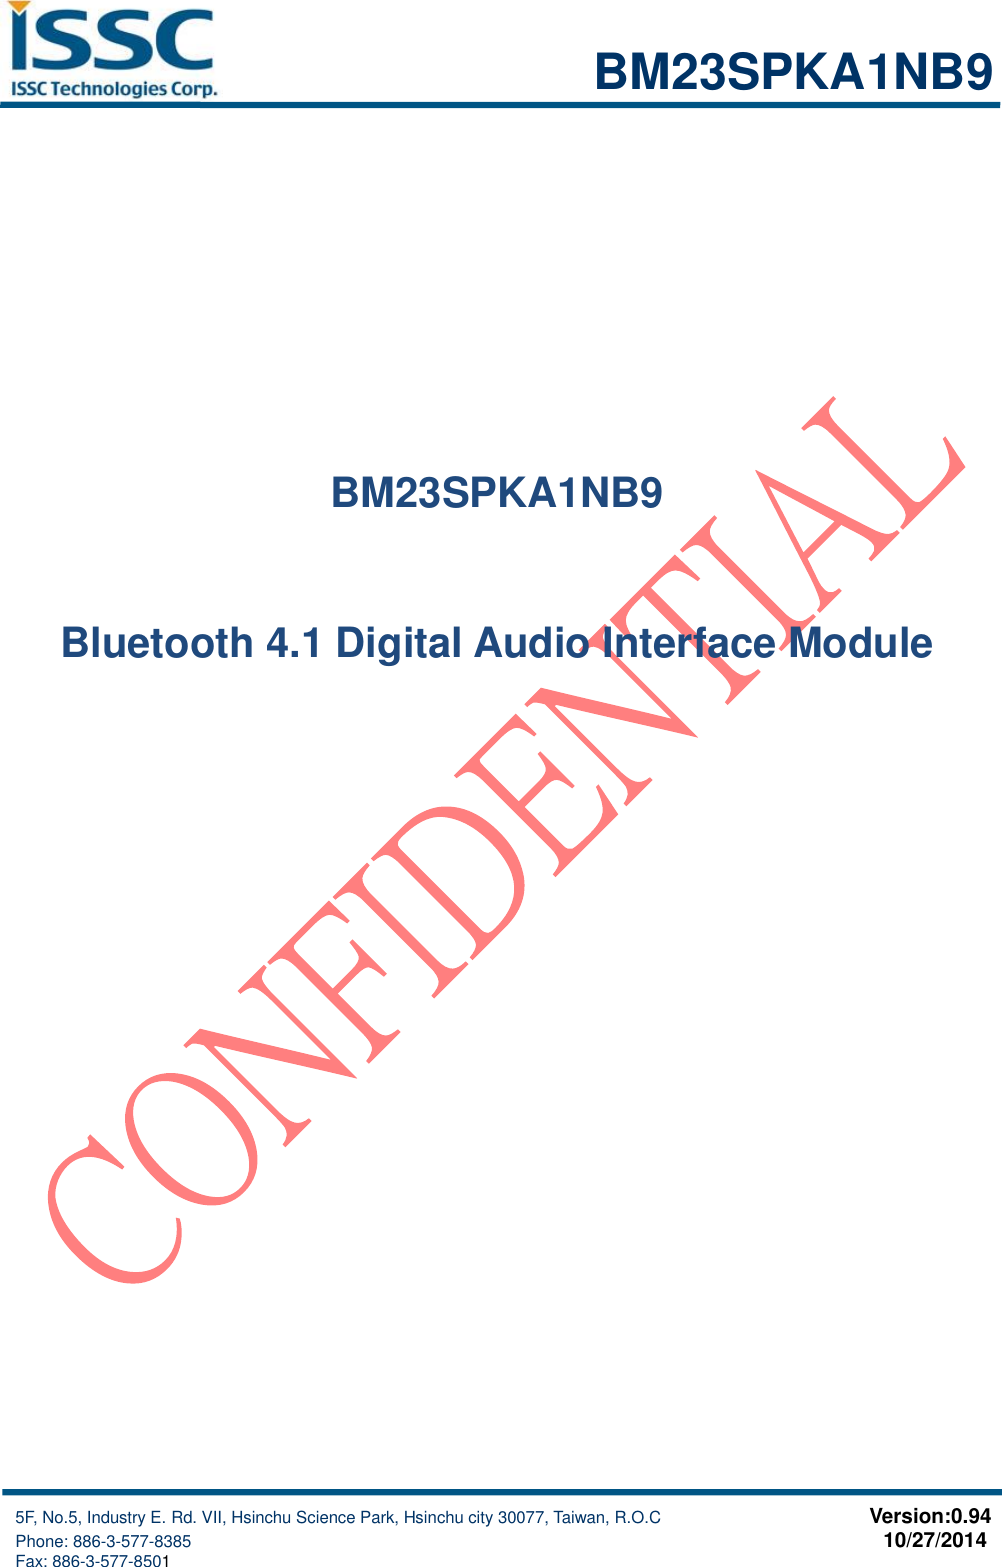                                                                           BM23SPKA1NB9     5F, No.5, Industry E. Rd. VII, Hsinchu Science Park, Hsinchu city 30077, Taiwan, R.O.C                                                  Version:0.94                                    Phone: 886-3-577-8385                                                                                   10/27/2014                                                                                            Fax: 886-3-577-8501        BM23SPKA1NB9  Bluetooth 4.1 Digital Audio Interface Module 